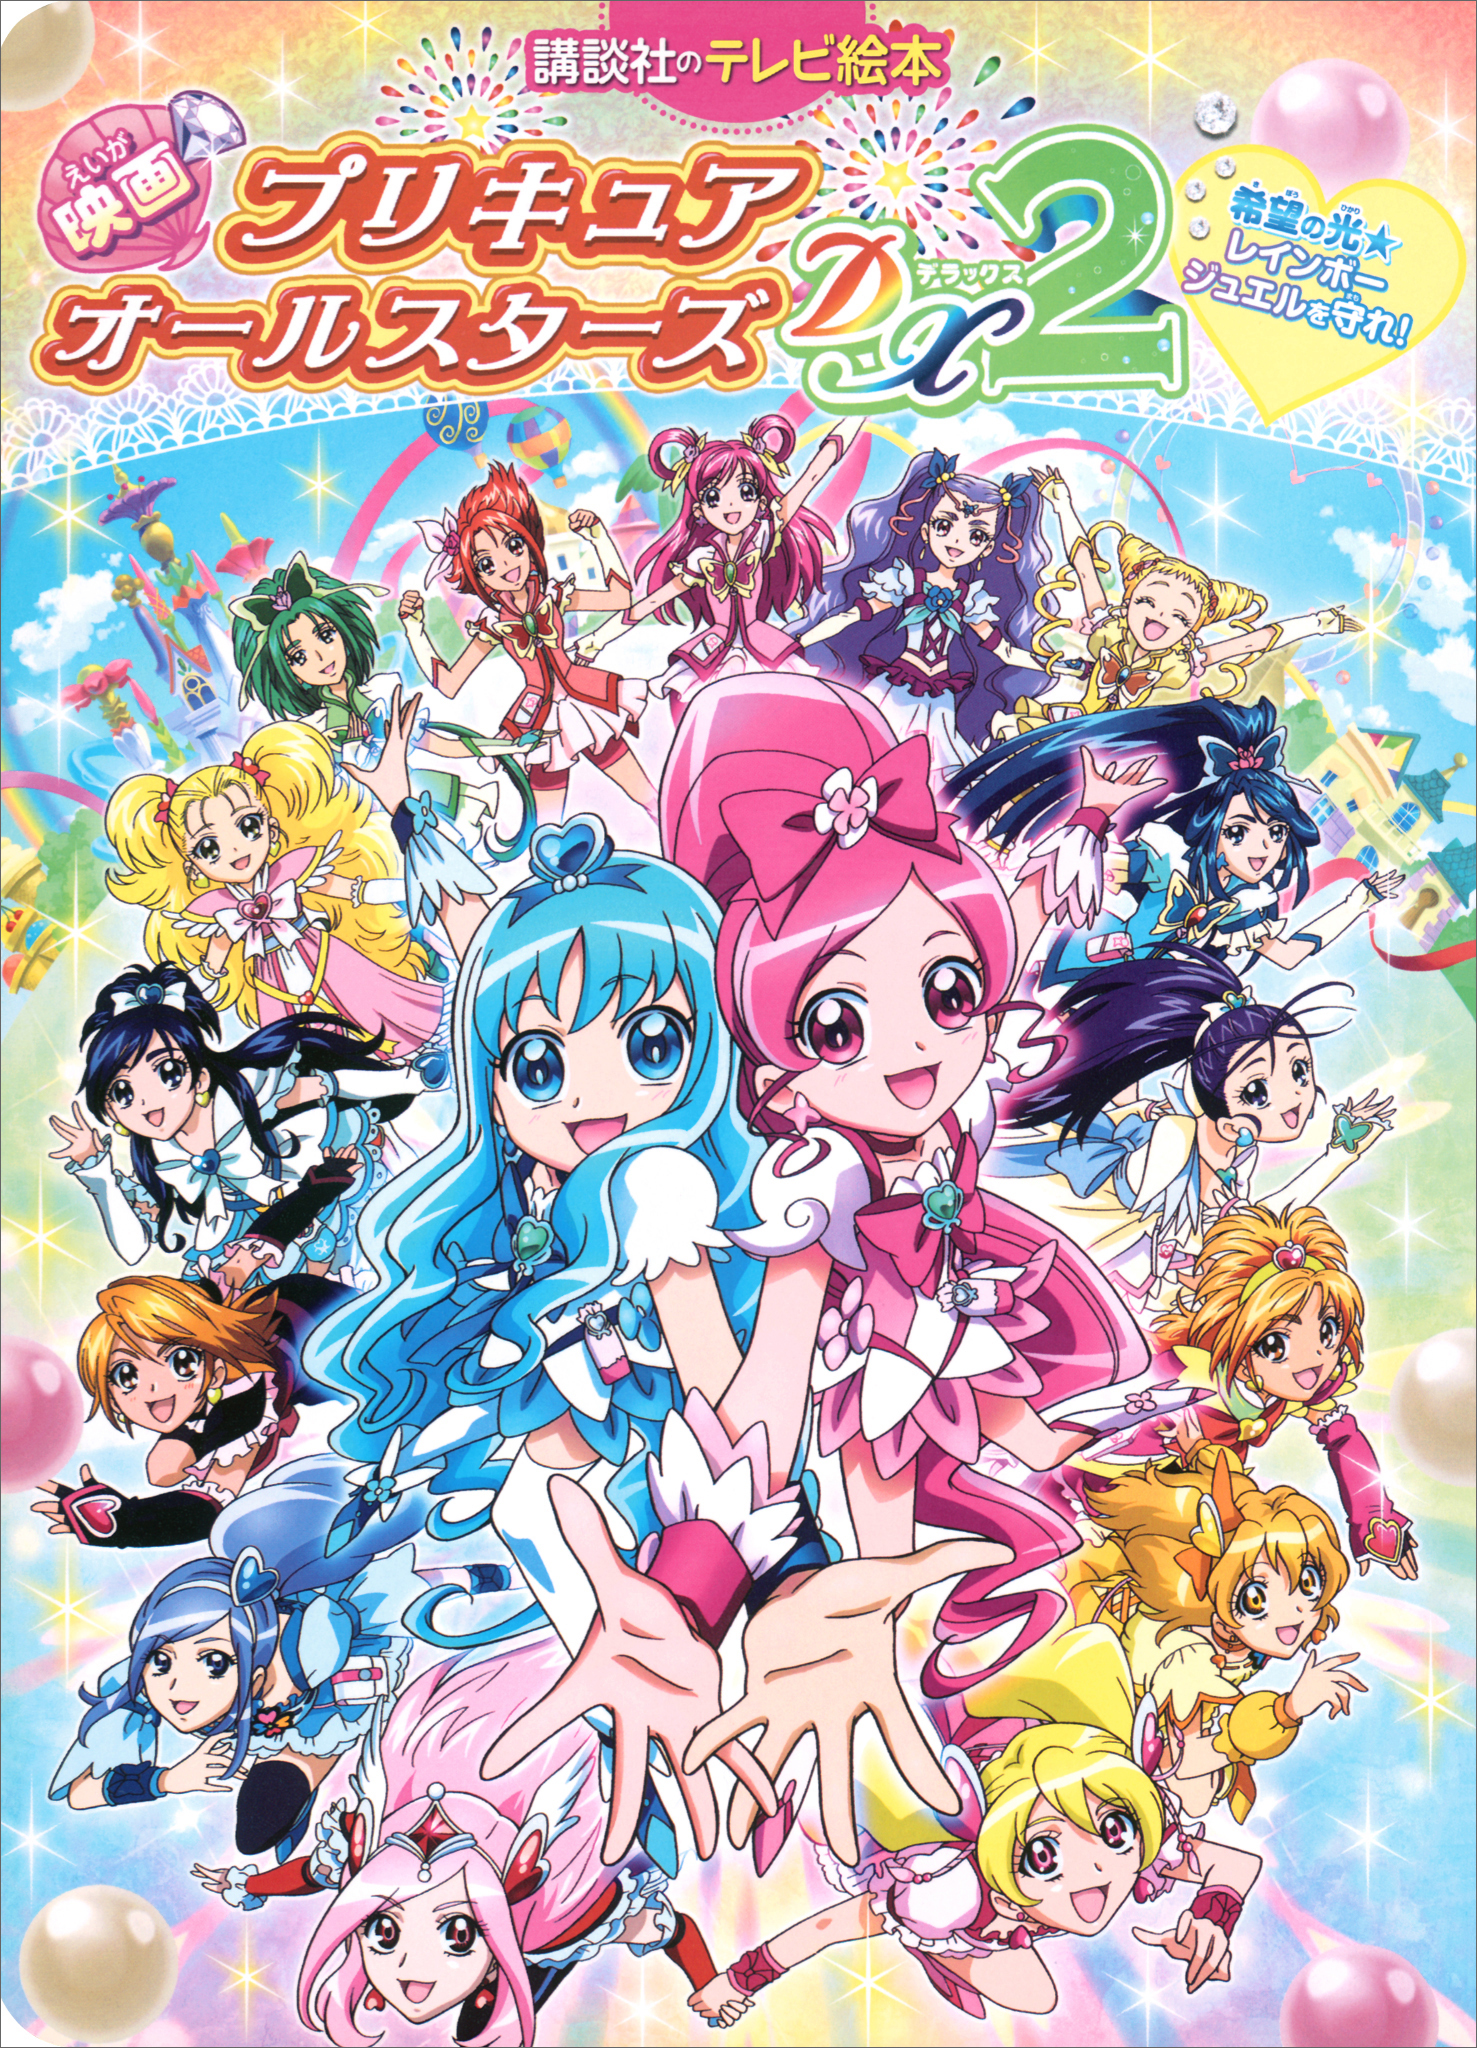 DVD 未来にとどけ!世界をつなぐ☆虹色の花 映画プリキュアオールスターズDX3 - 9